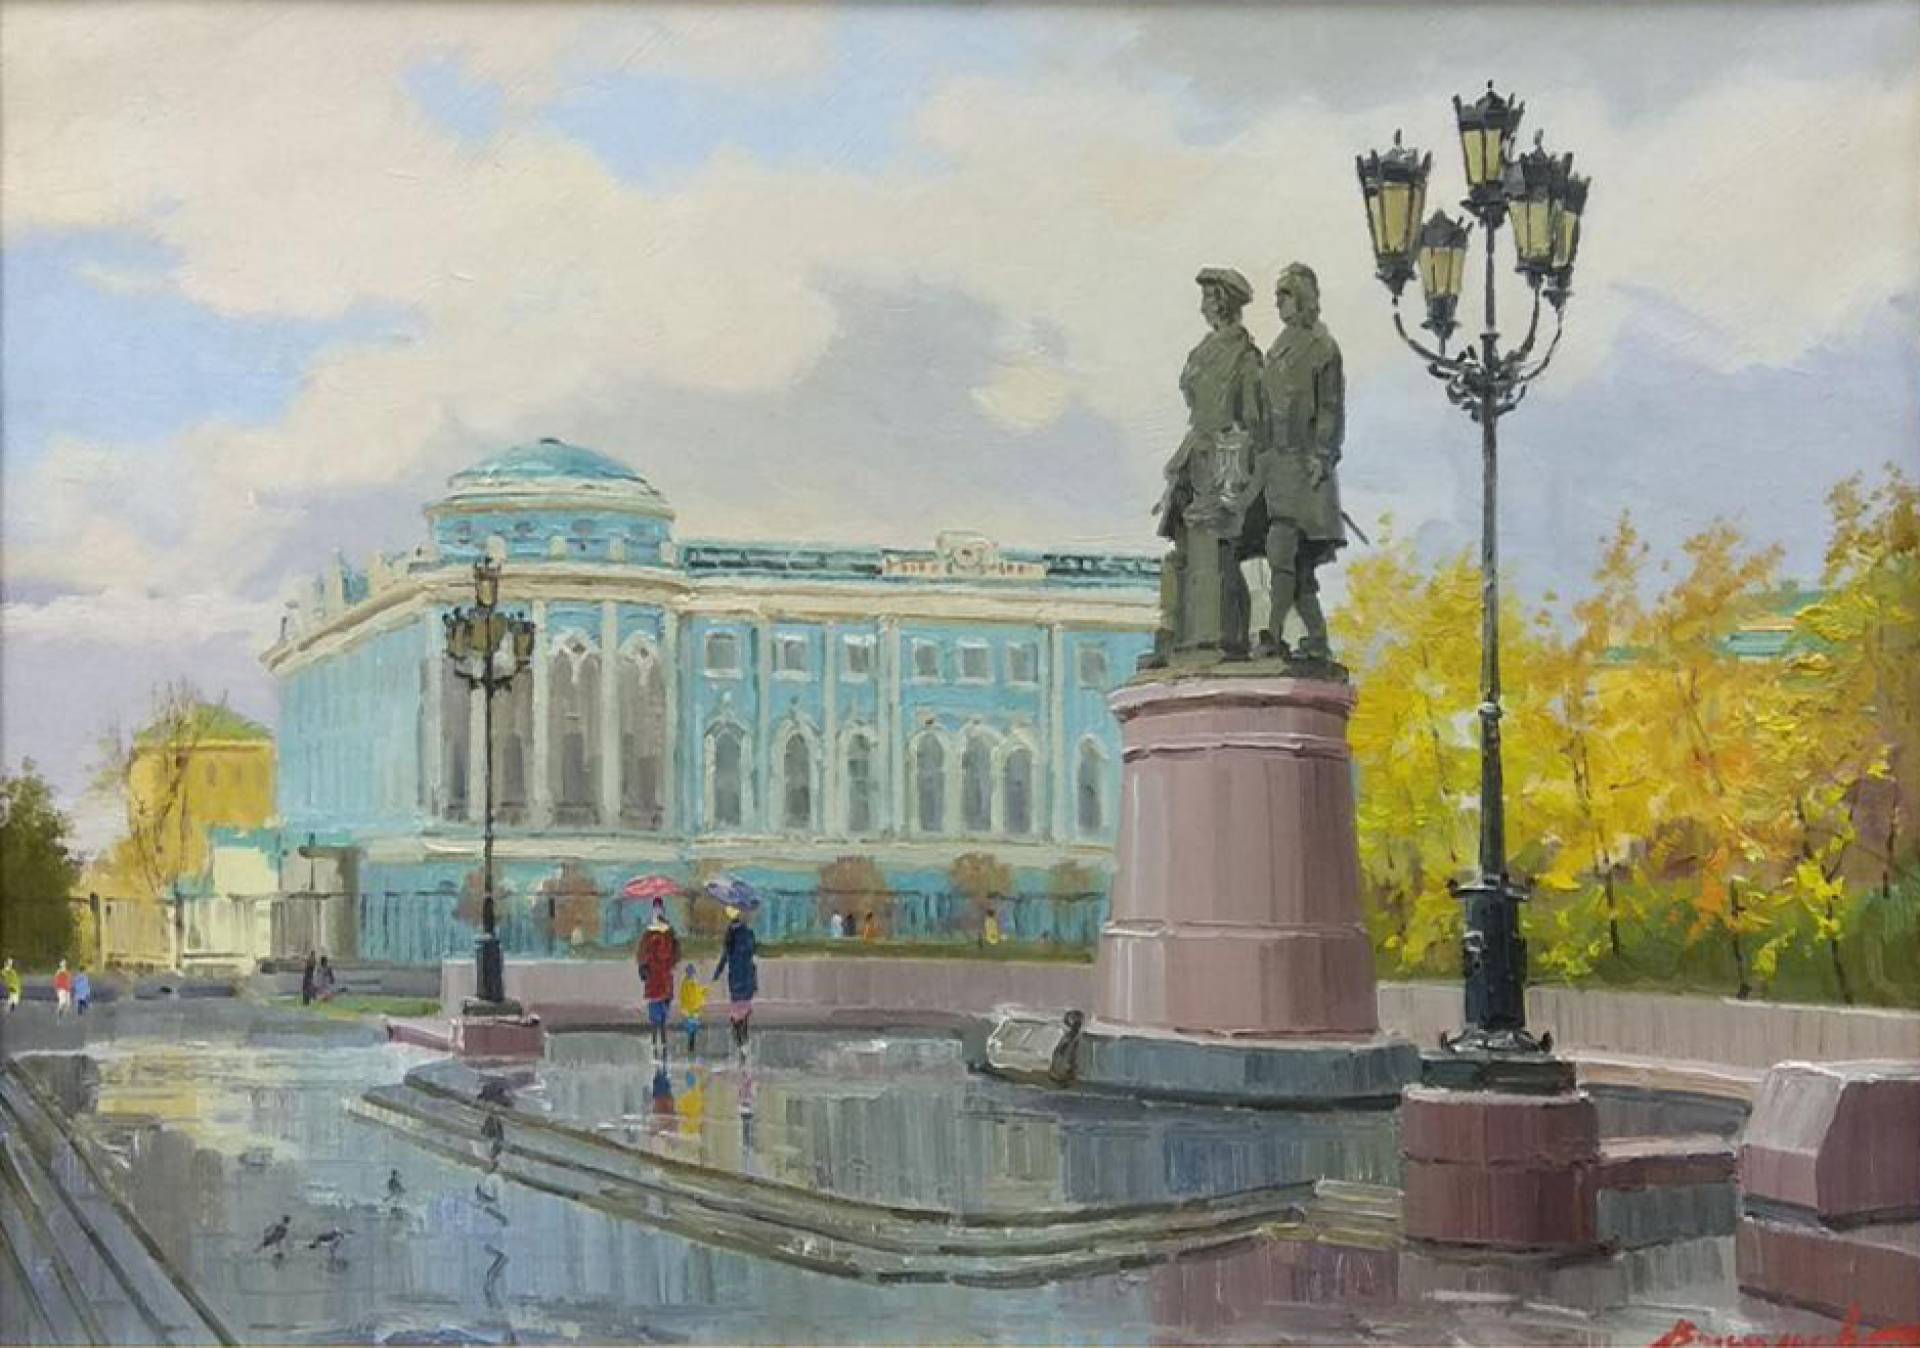 Autumn Yekaterinburg, Dmitry Vasiliev, Buy the painting Oil